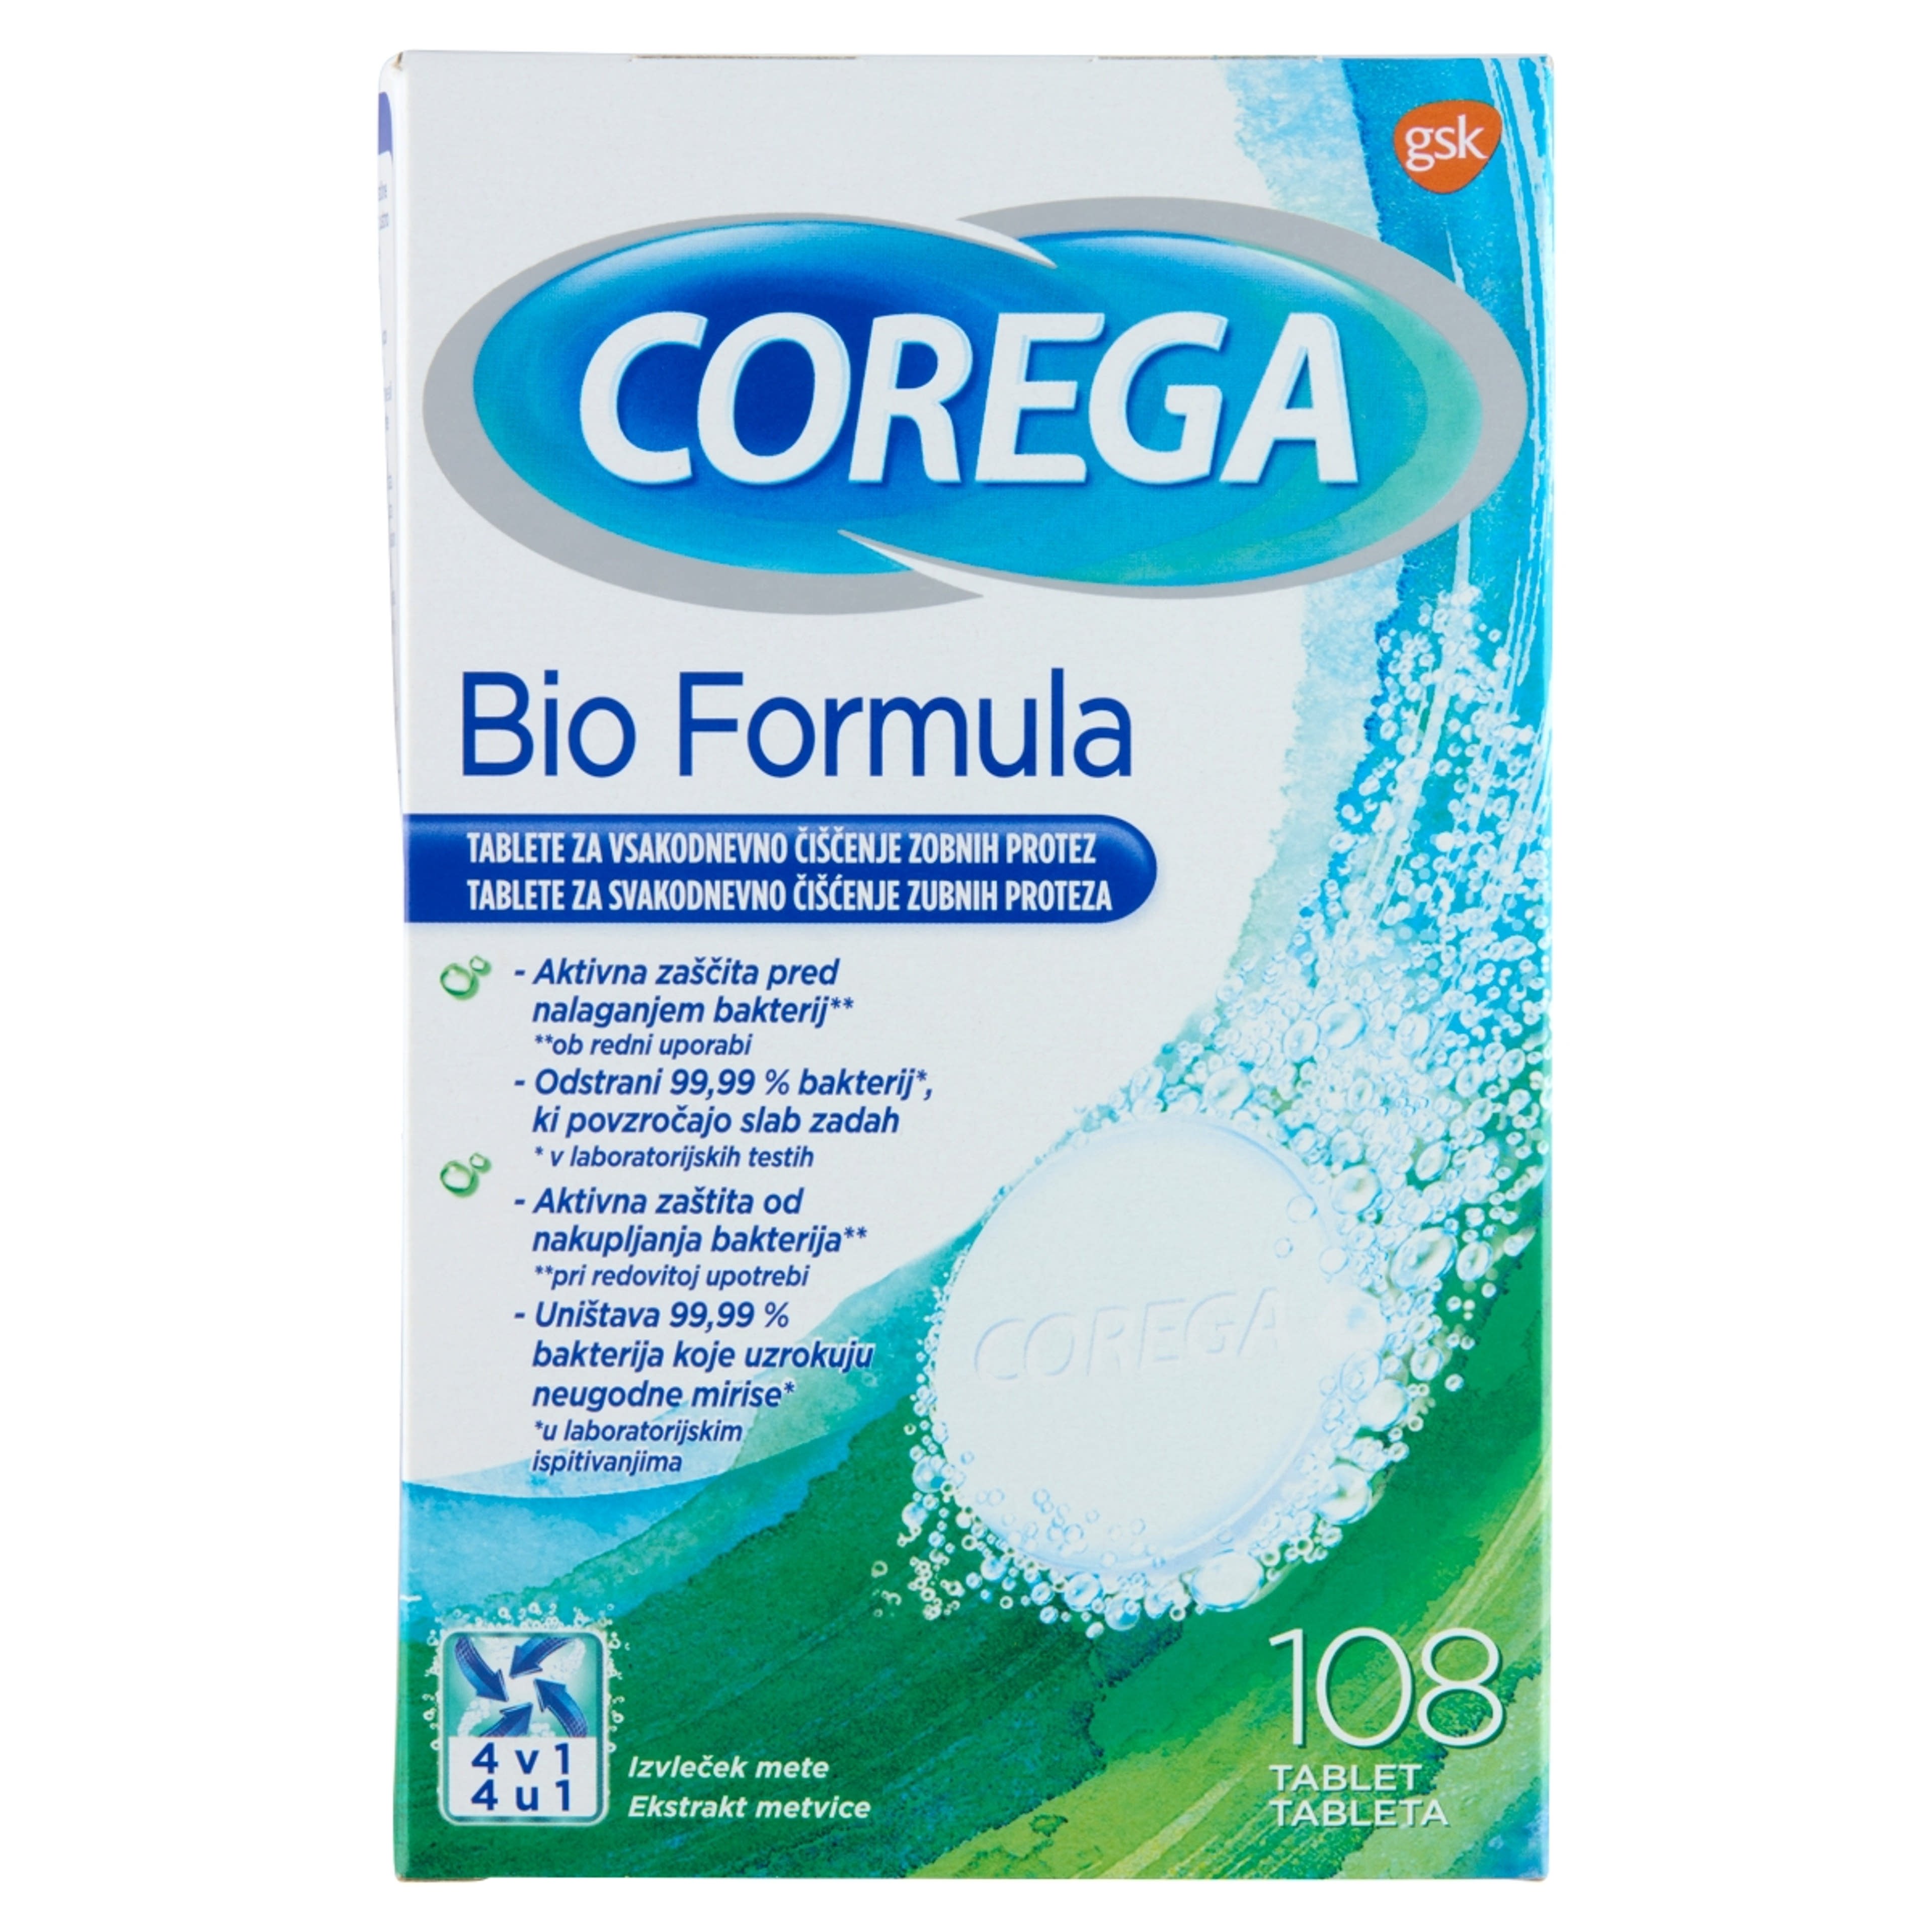 Corega Bio Formula mufogsortisztító tabletta - 96 db